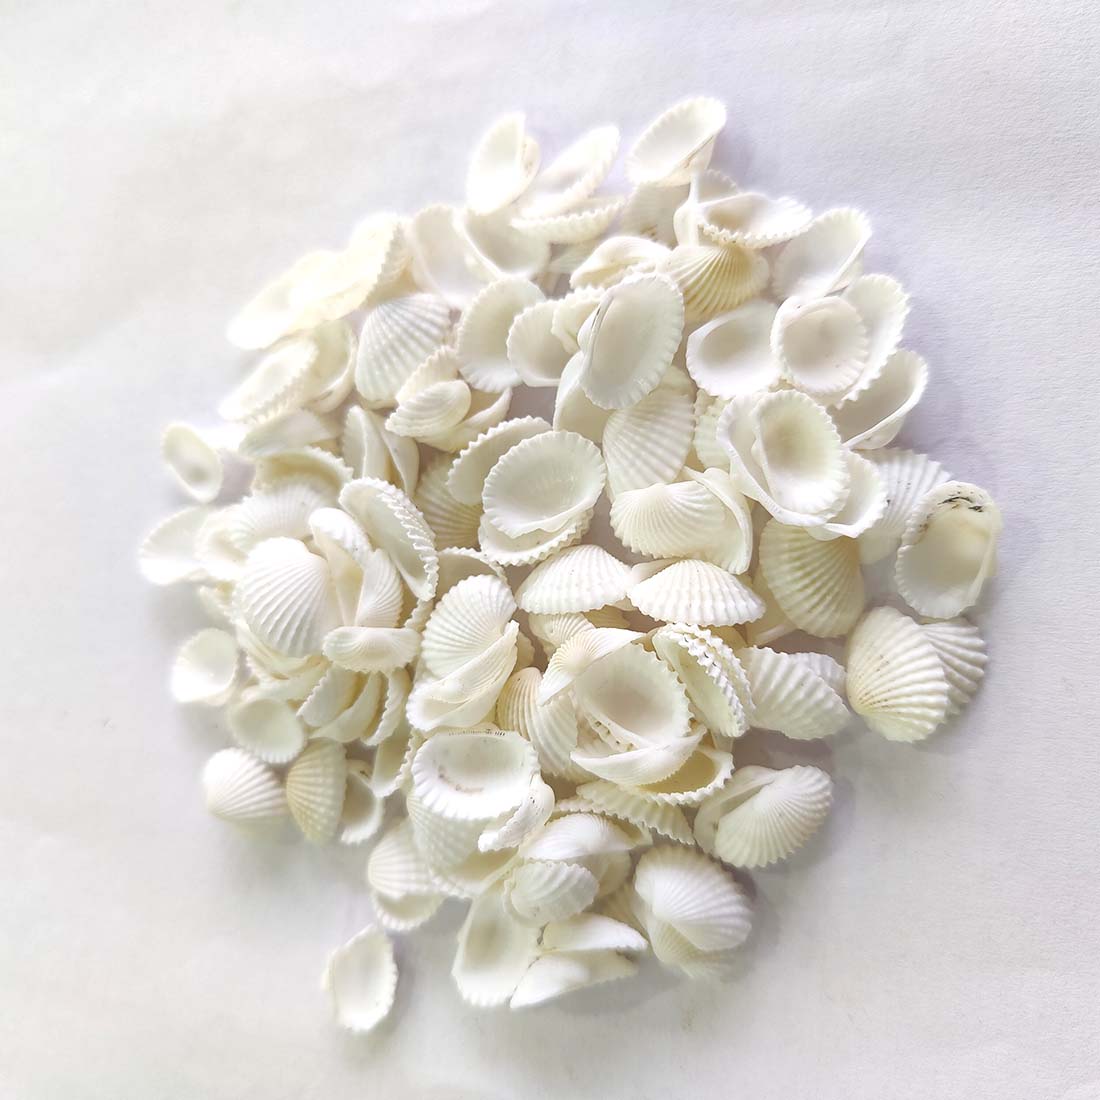 Anadara Granosa Seashell (Medium Size 2 cm. Approx)